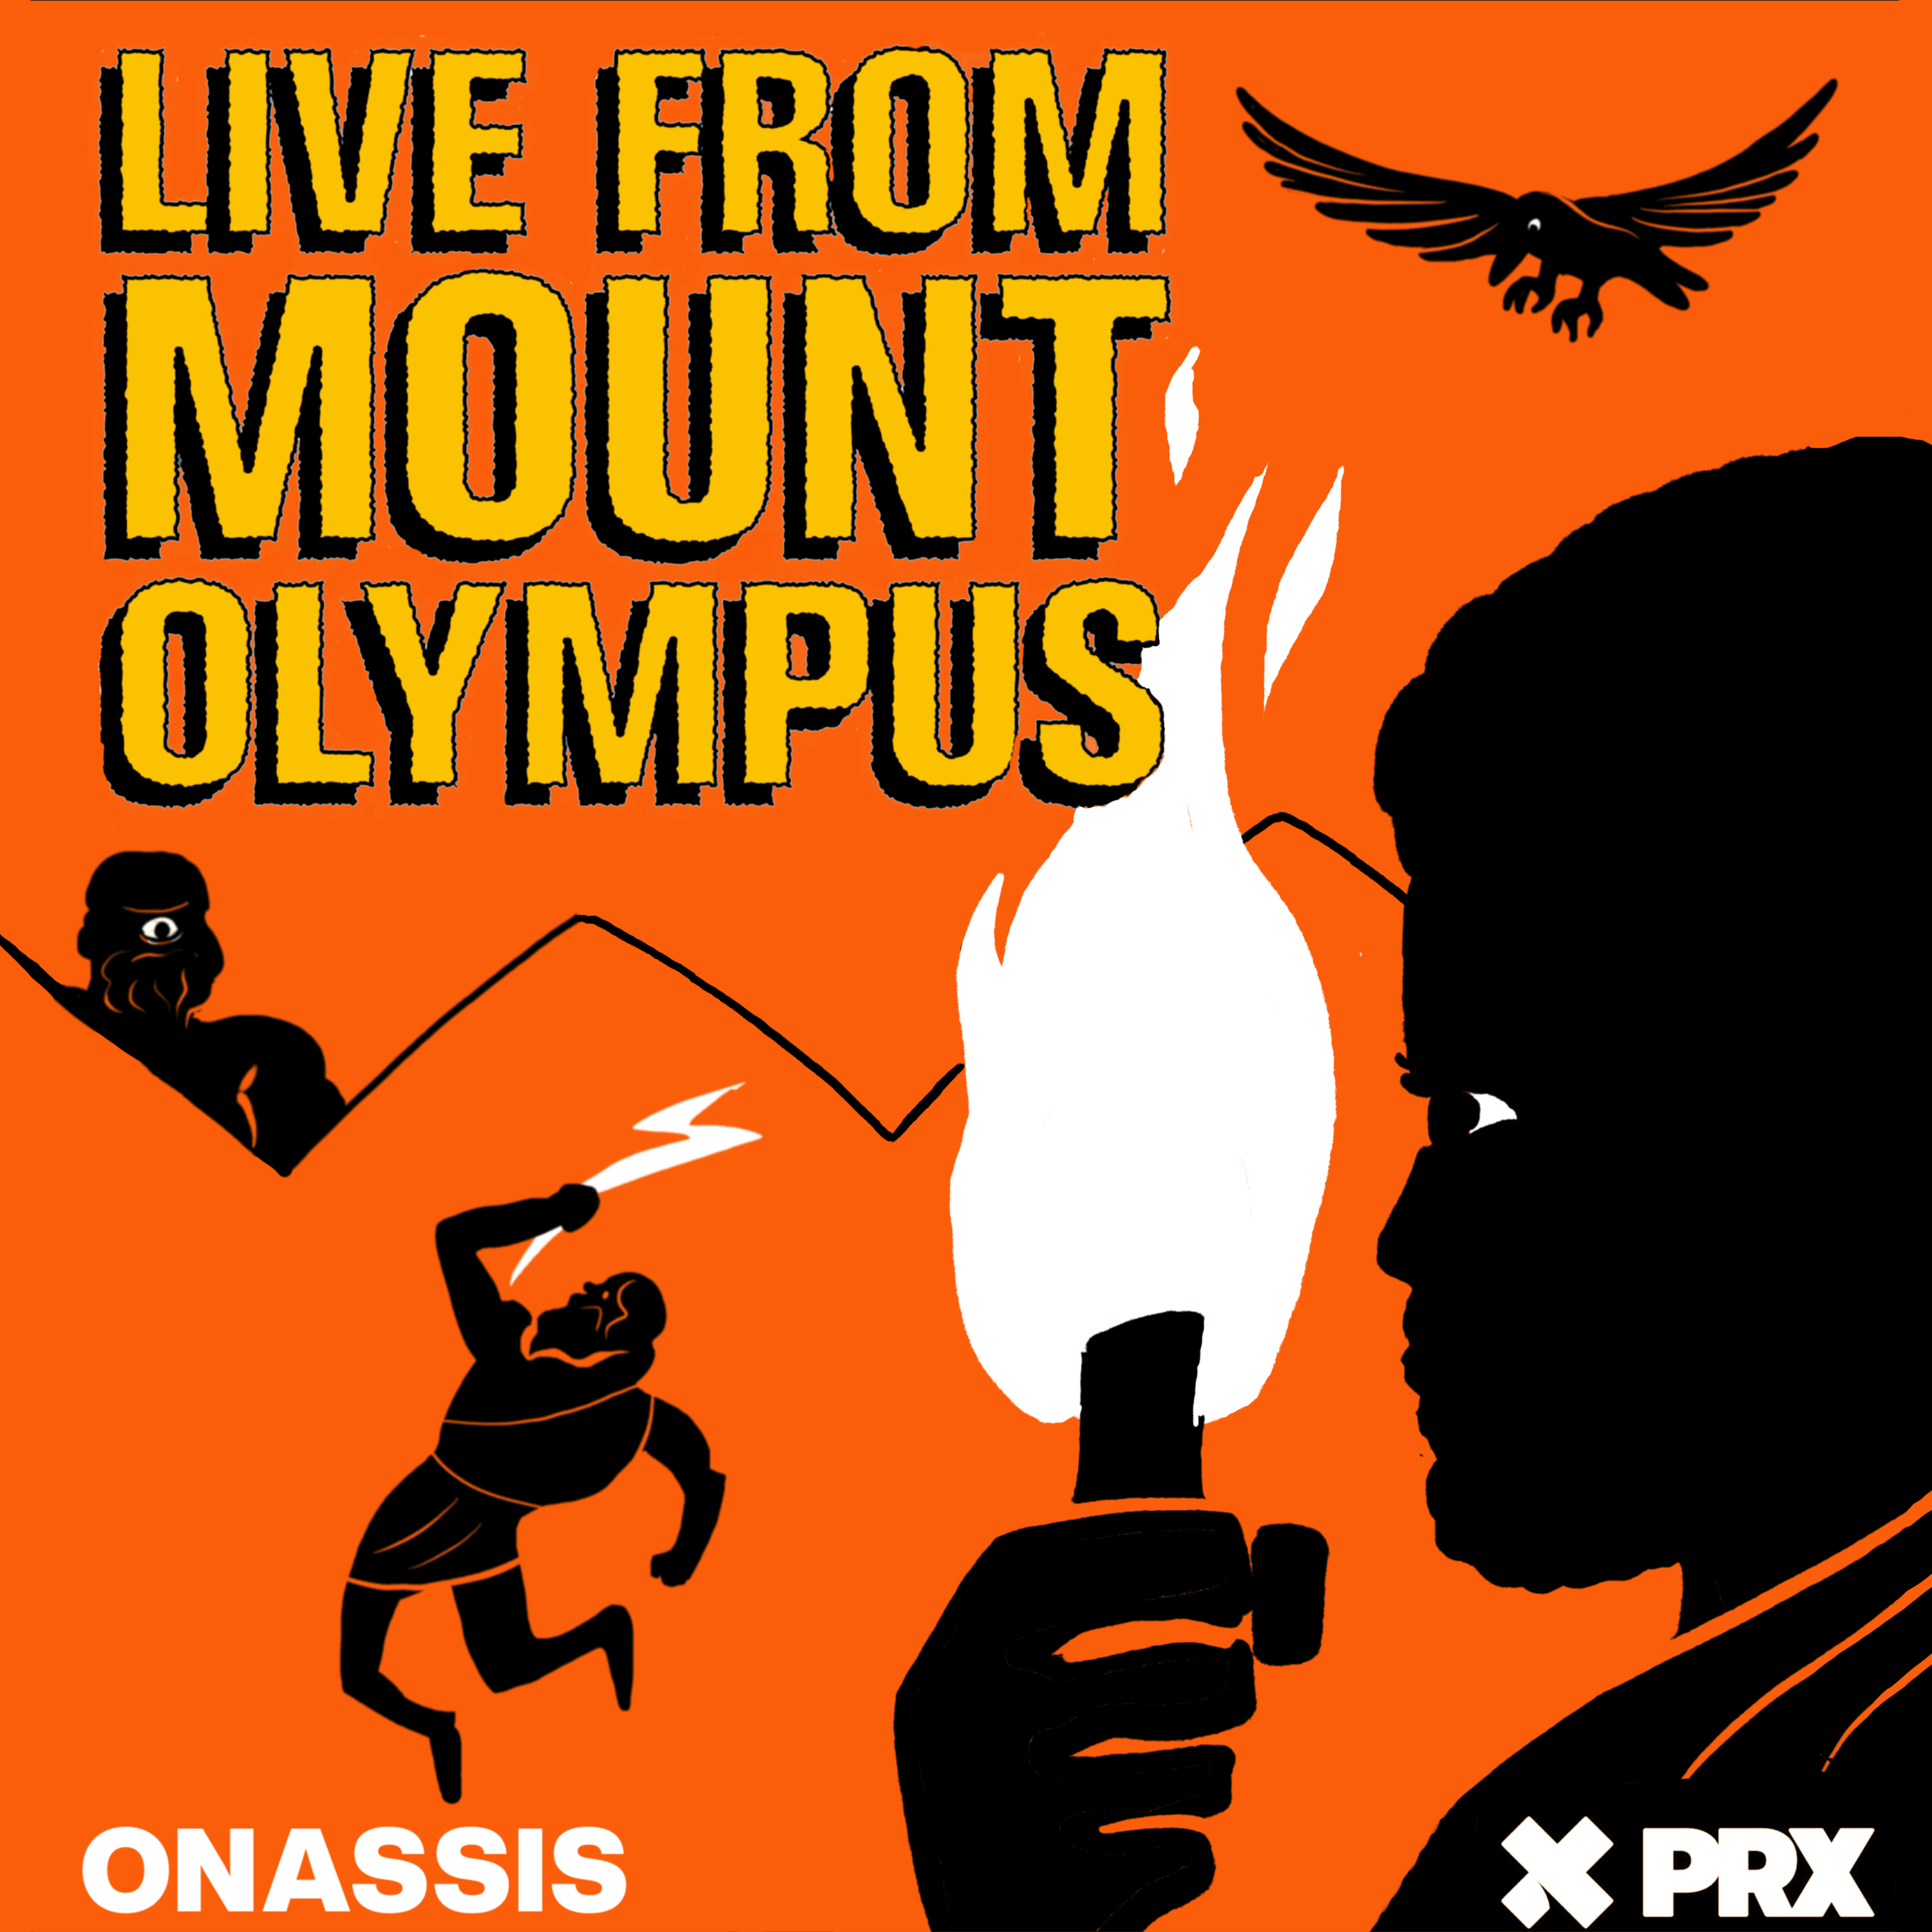 Thumbnail for "Prometheus: Live from Mount Olympus Season Four Trailer".